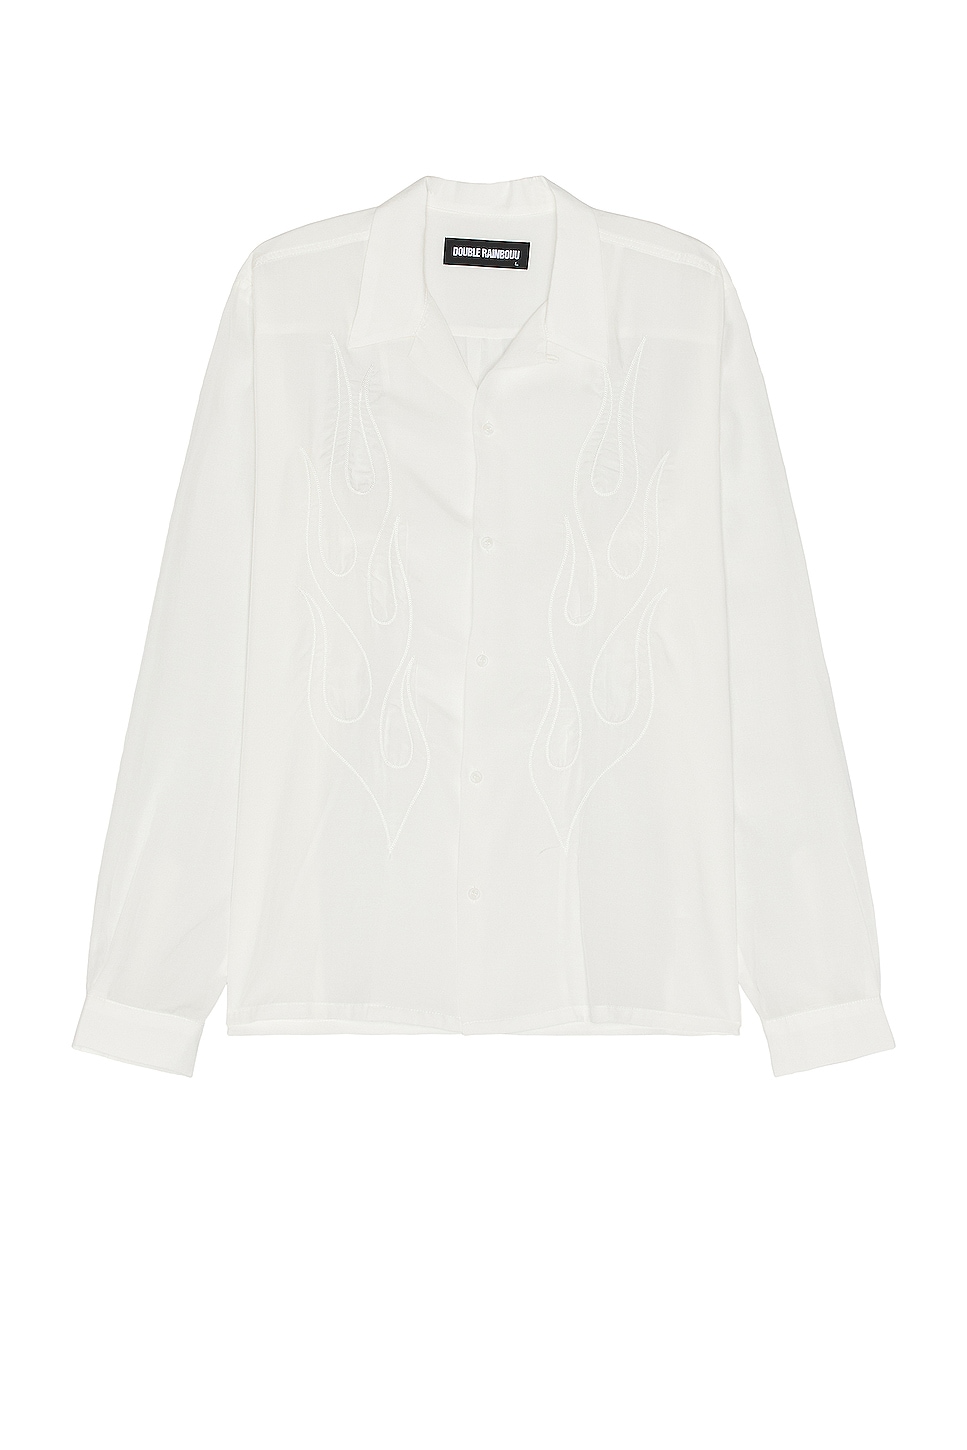 Image 1 of DOUBLE RAINBOUU Long Sleeve Shirt in Blazed White